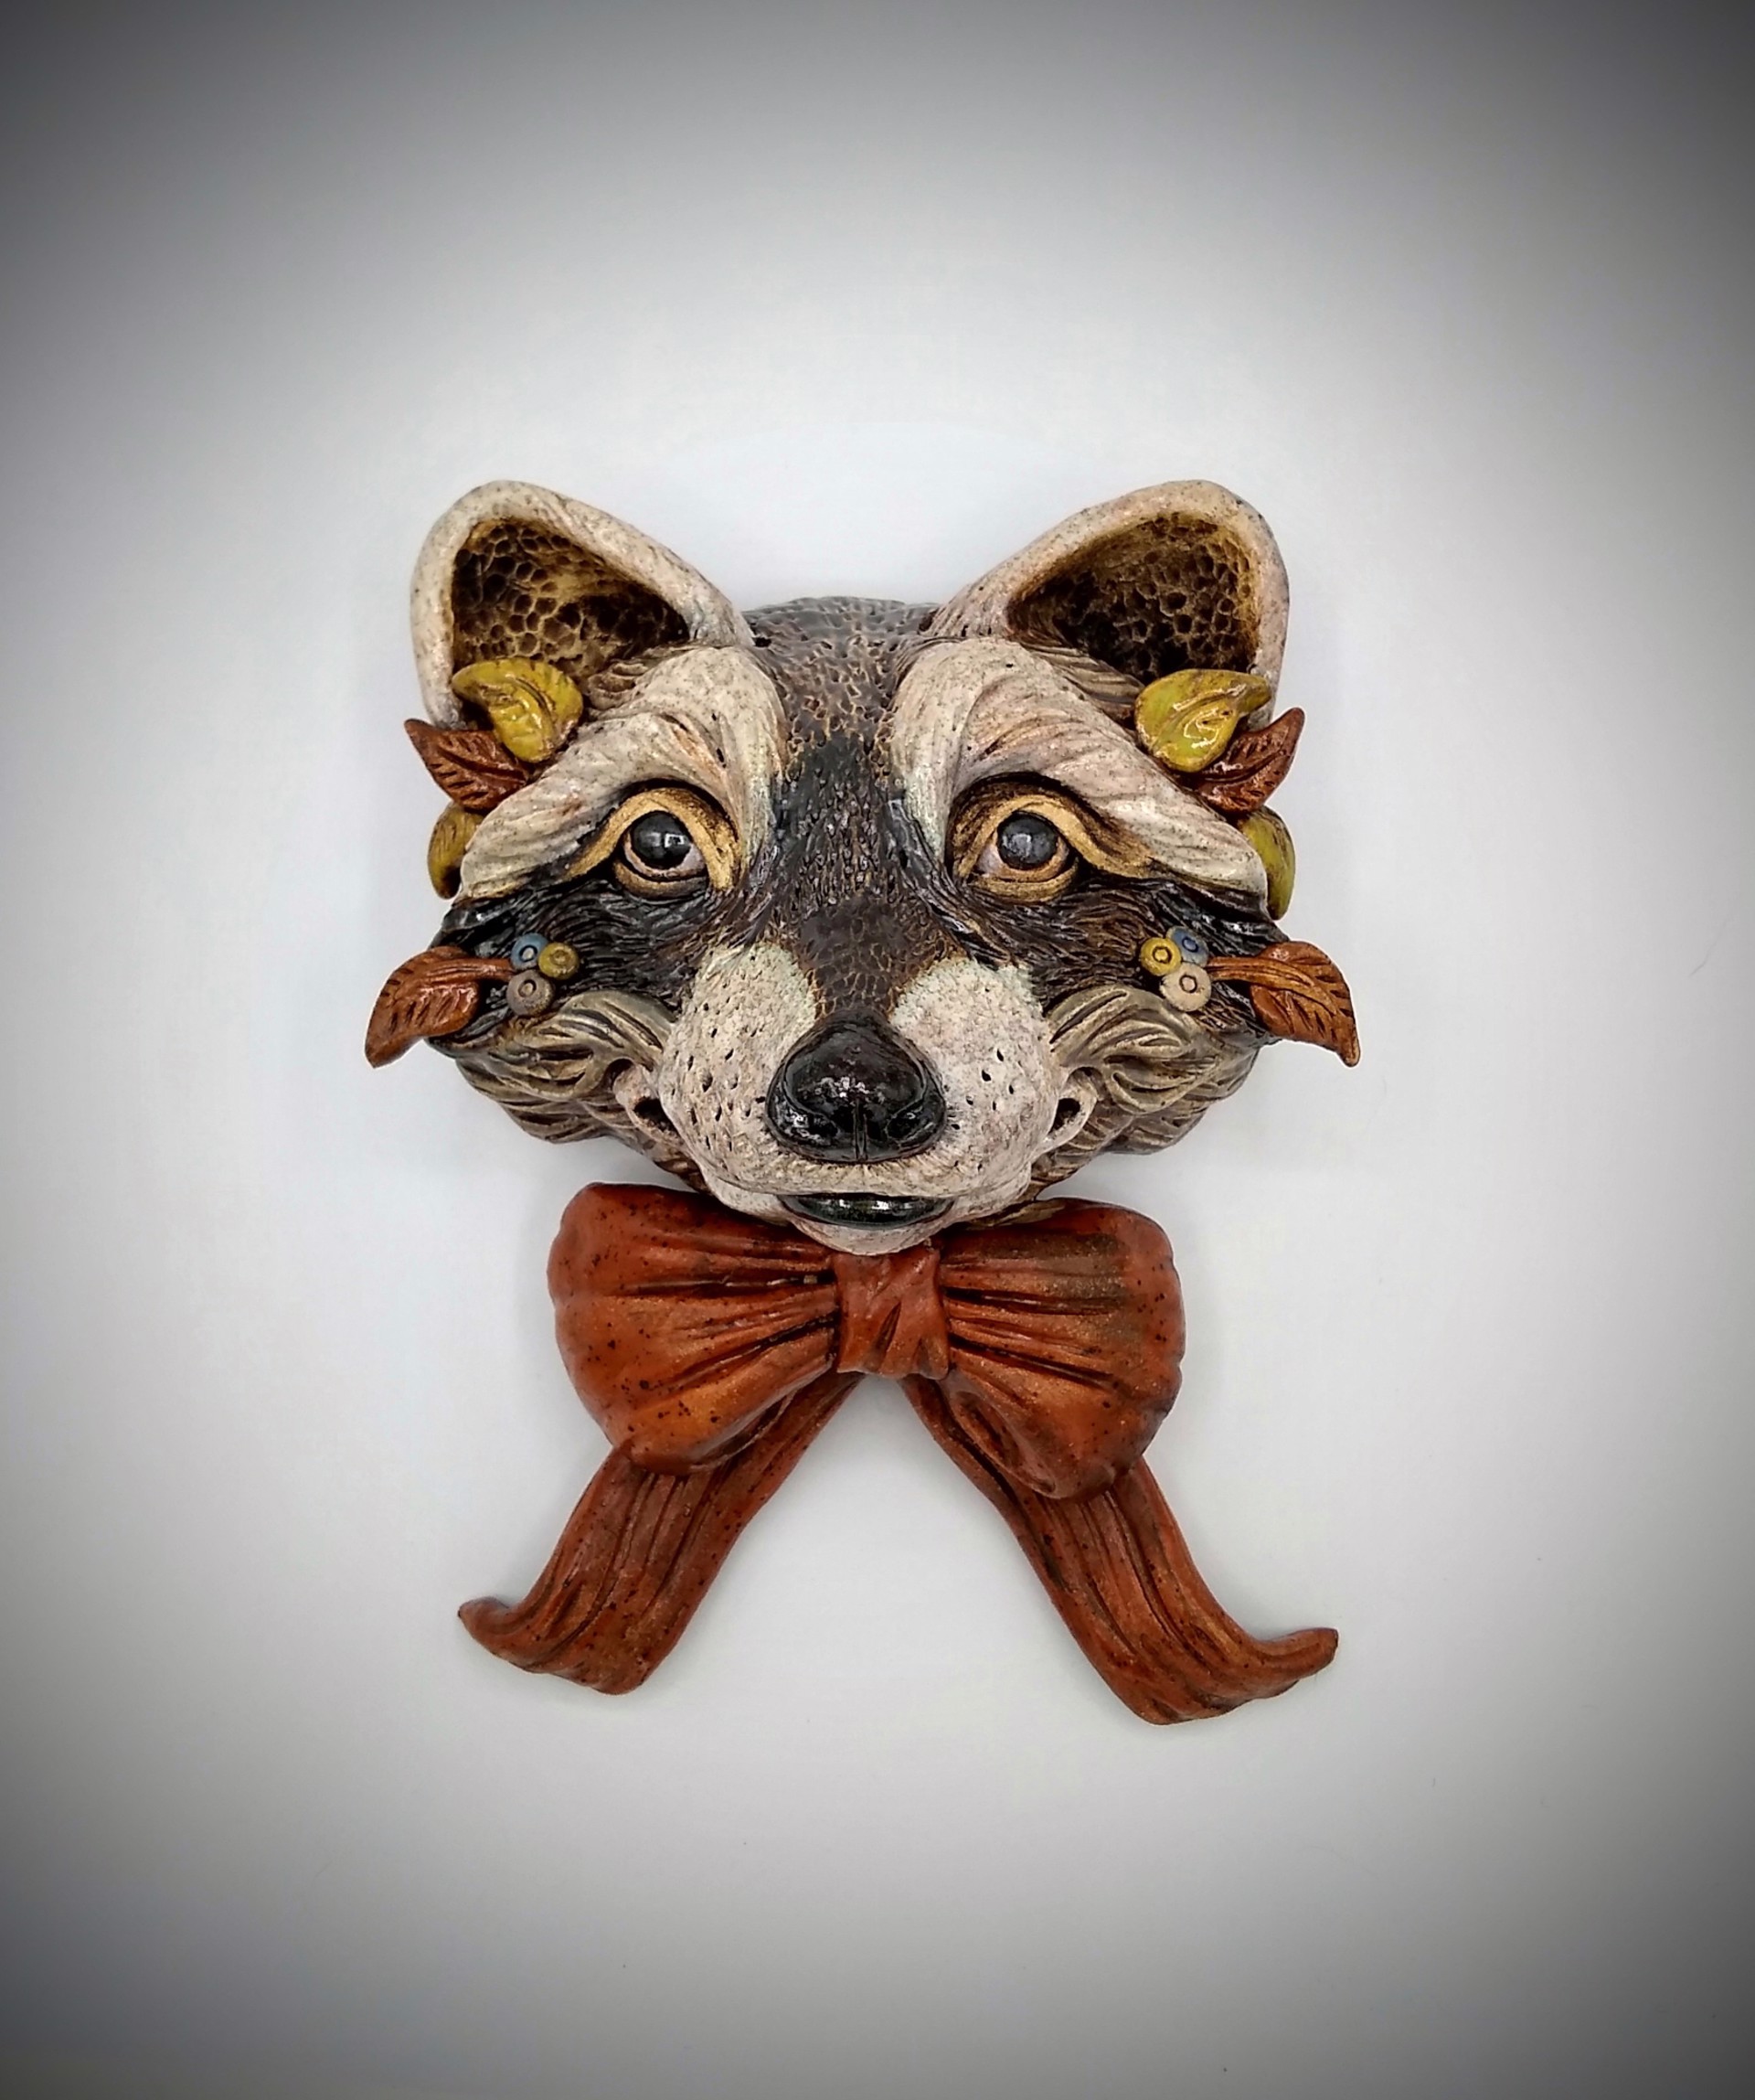 Speckled Tie Raccoon by Cheryl Quintana